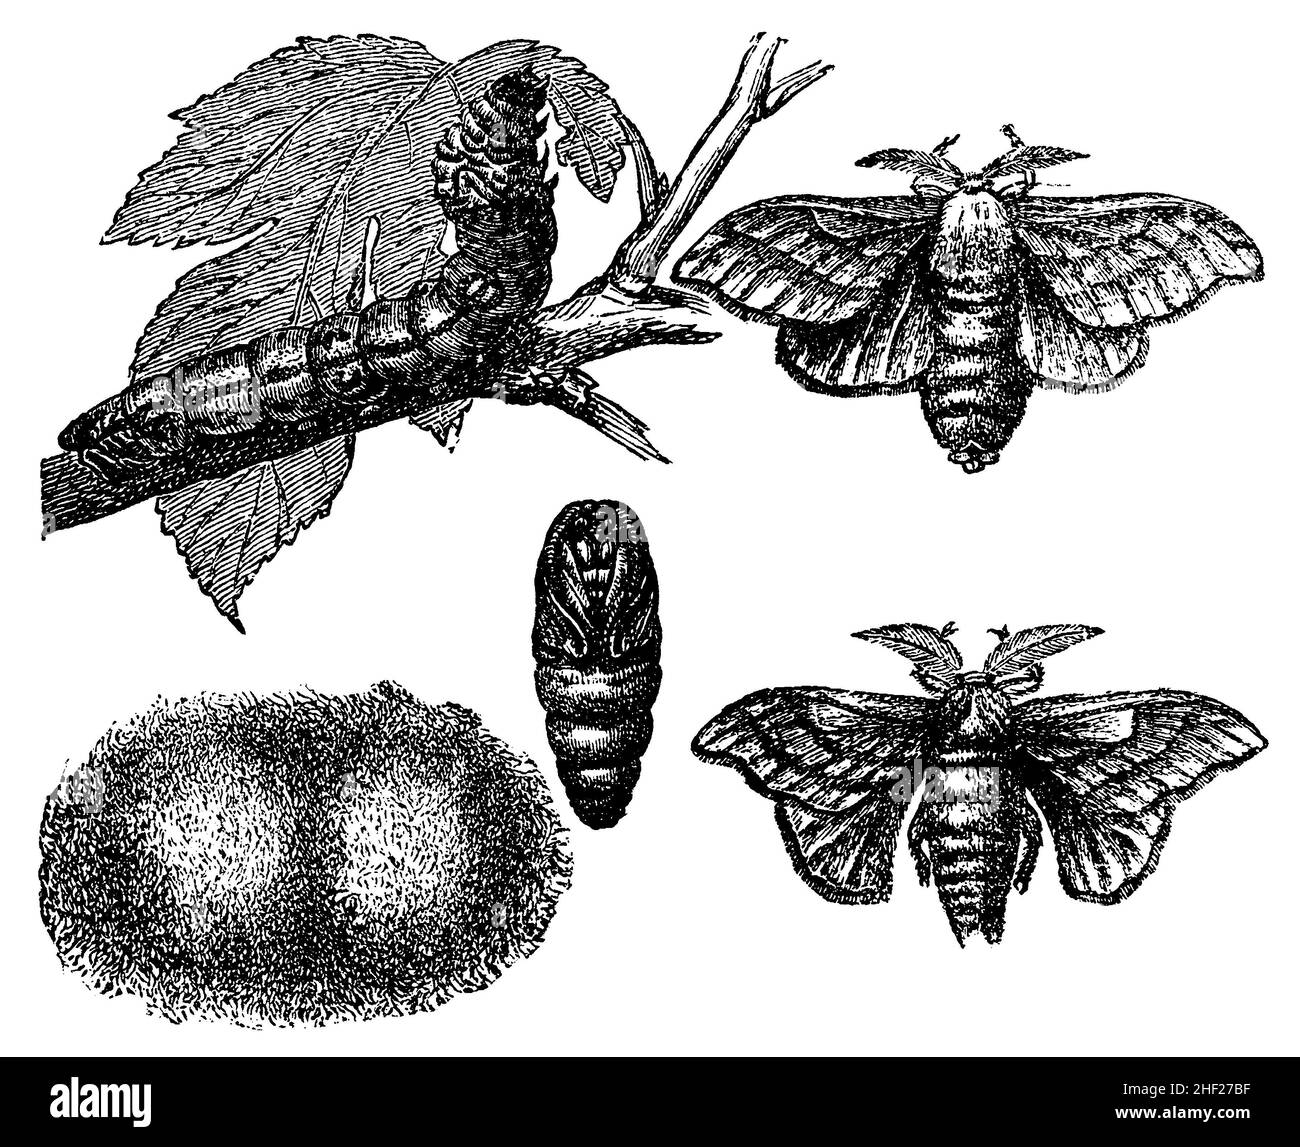 Seidenmotte, Bombyx mori, anonym (Biologiebuch, 1896), Seidenspinner: Rechts oben: Weibchen, rechts unten: Männchen, mitte: Puppe, links oben Raupe, links unten: Kokon, Bombyx du Mûrier Stockfoto